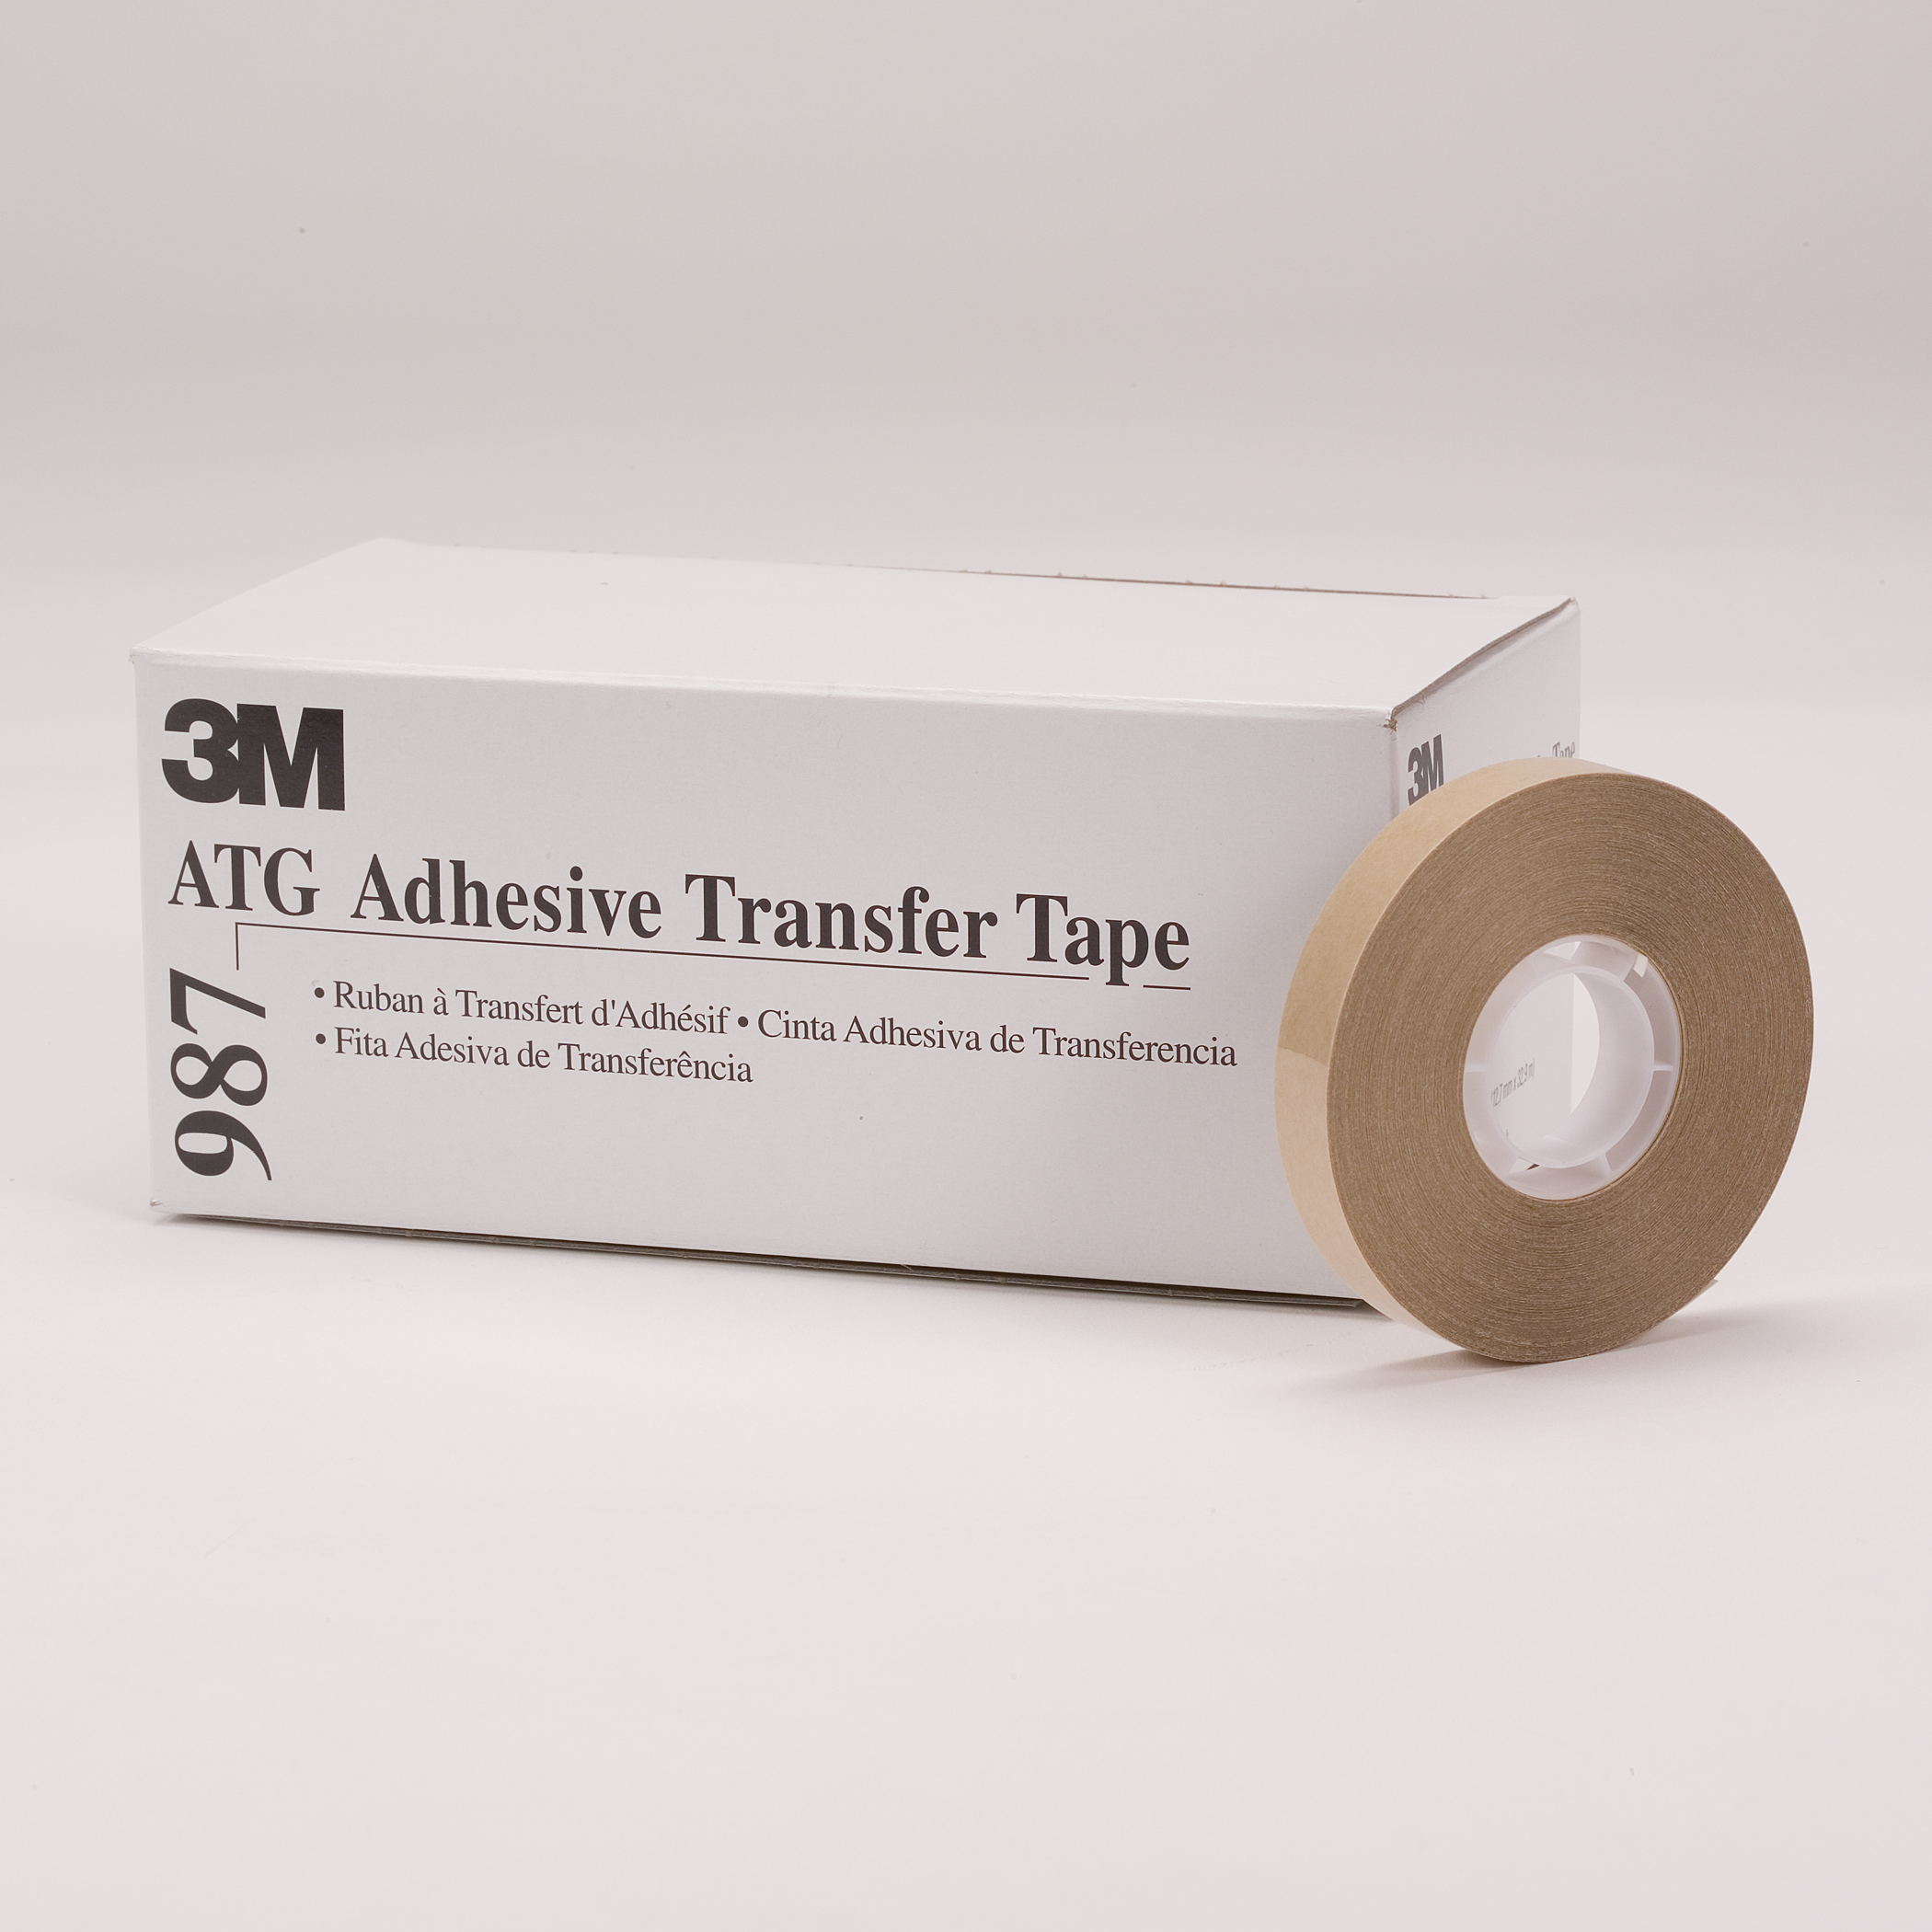 Part # 987, 3M™ ATG Adhesive Transfer Tape On Converters, Inc.